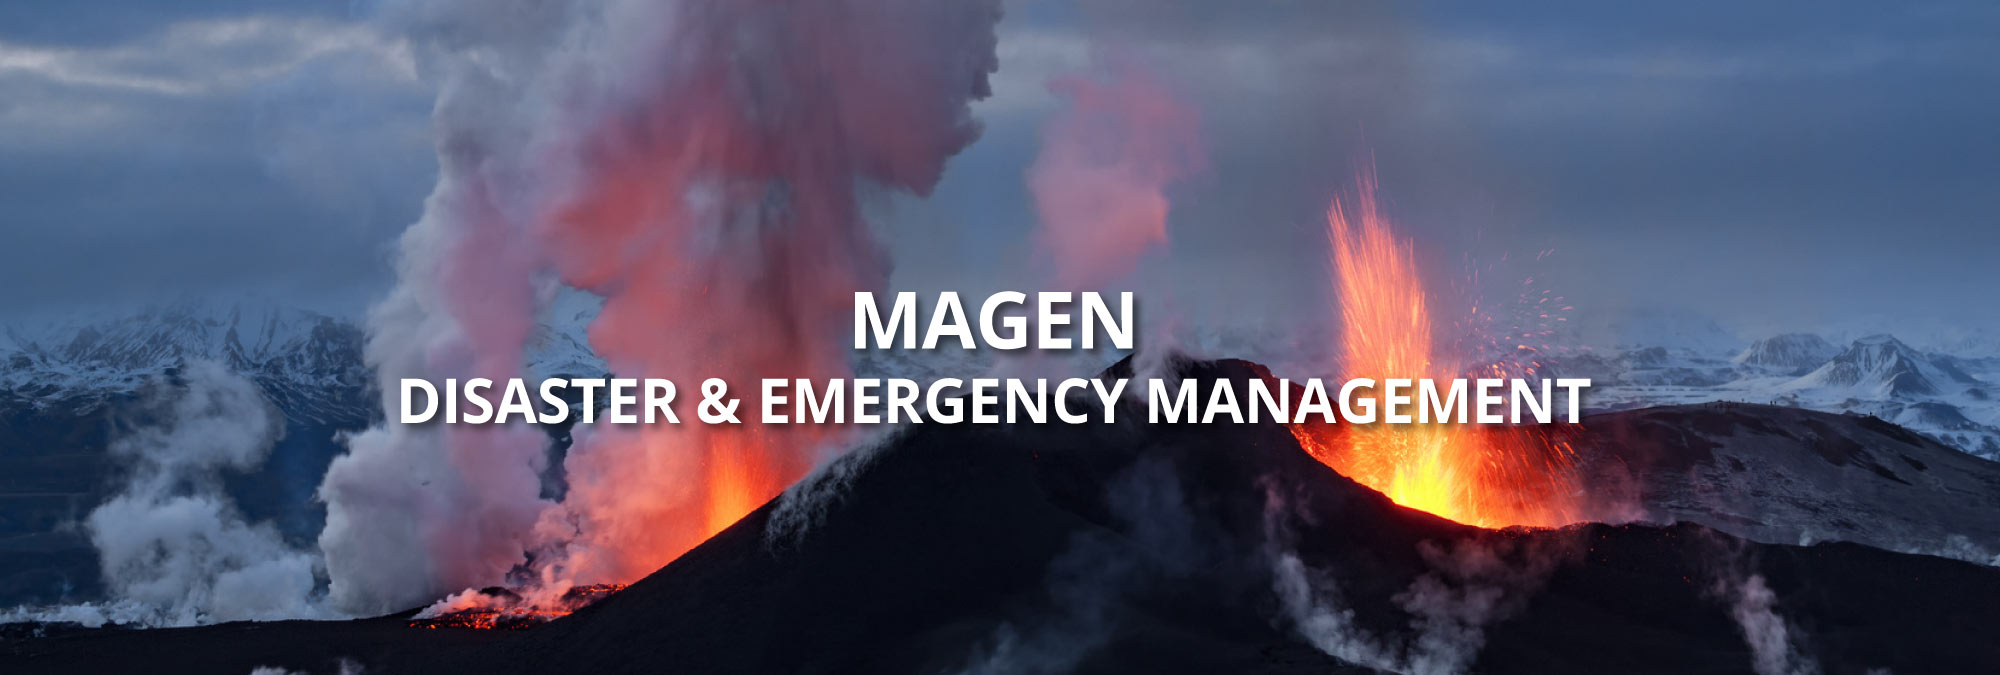 MAGEN – DISASTER & EMERGENCY MANAGEMENT